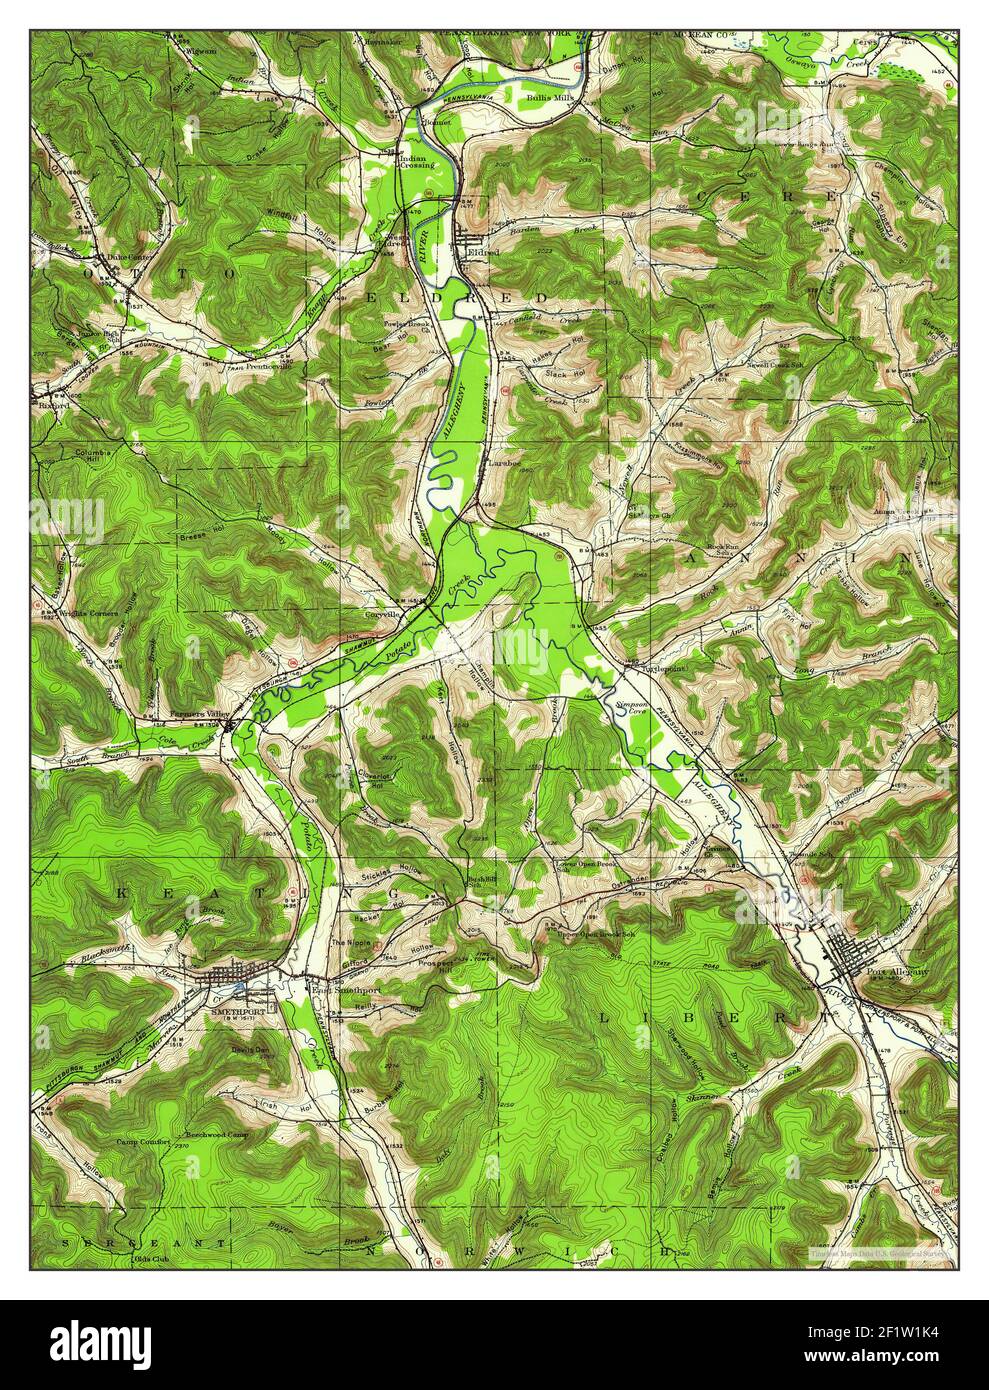 Smethport, Pennsylvania, map 1933, 1:62500, United States of America by Timeless Maps, data U.S. Geological Survey Stock Photo